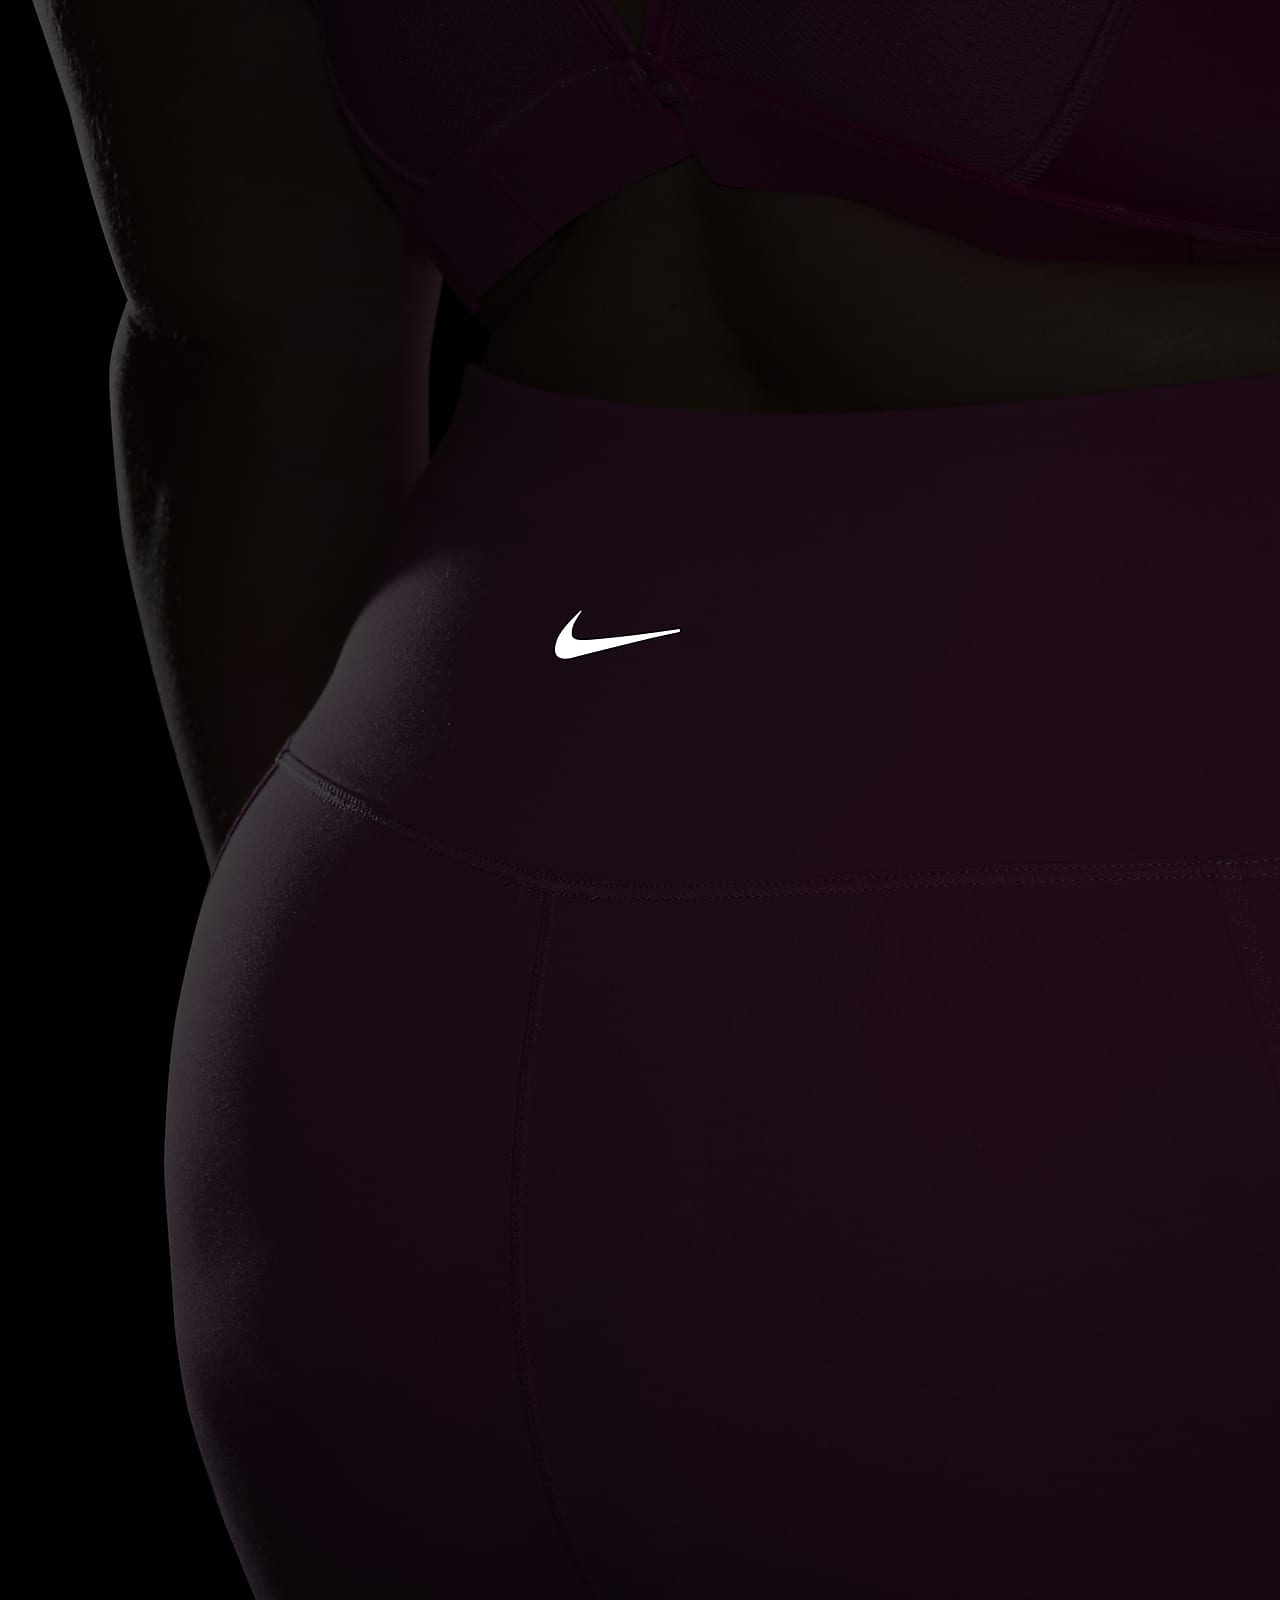 Nike Women's Just Do it Essential HR Full Length Legging In Plus Size 1X,2X,3X